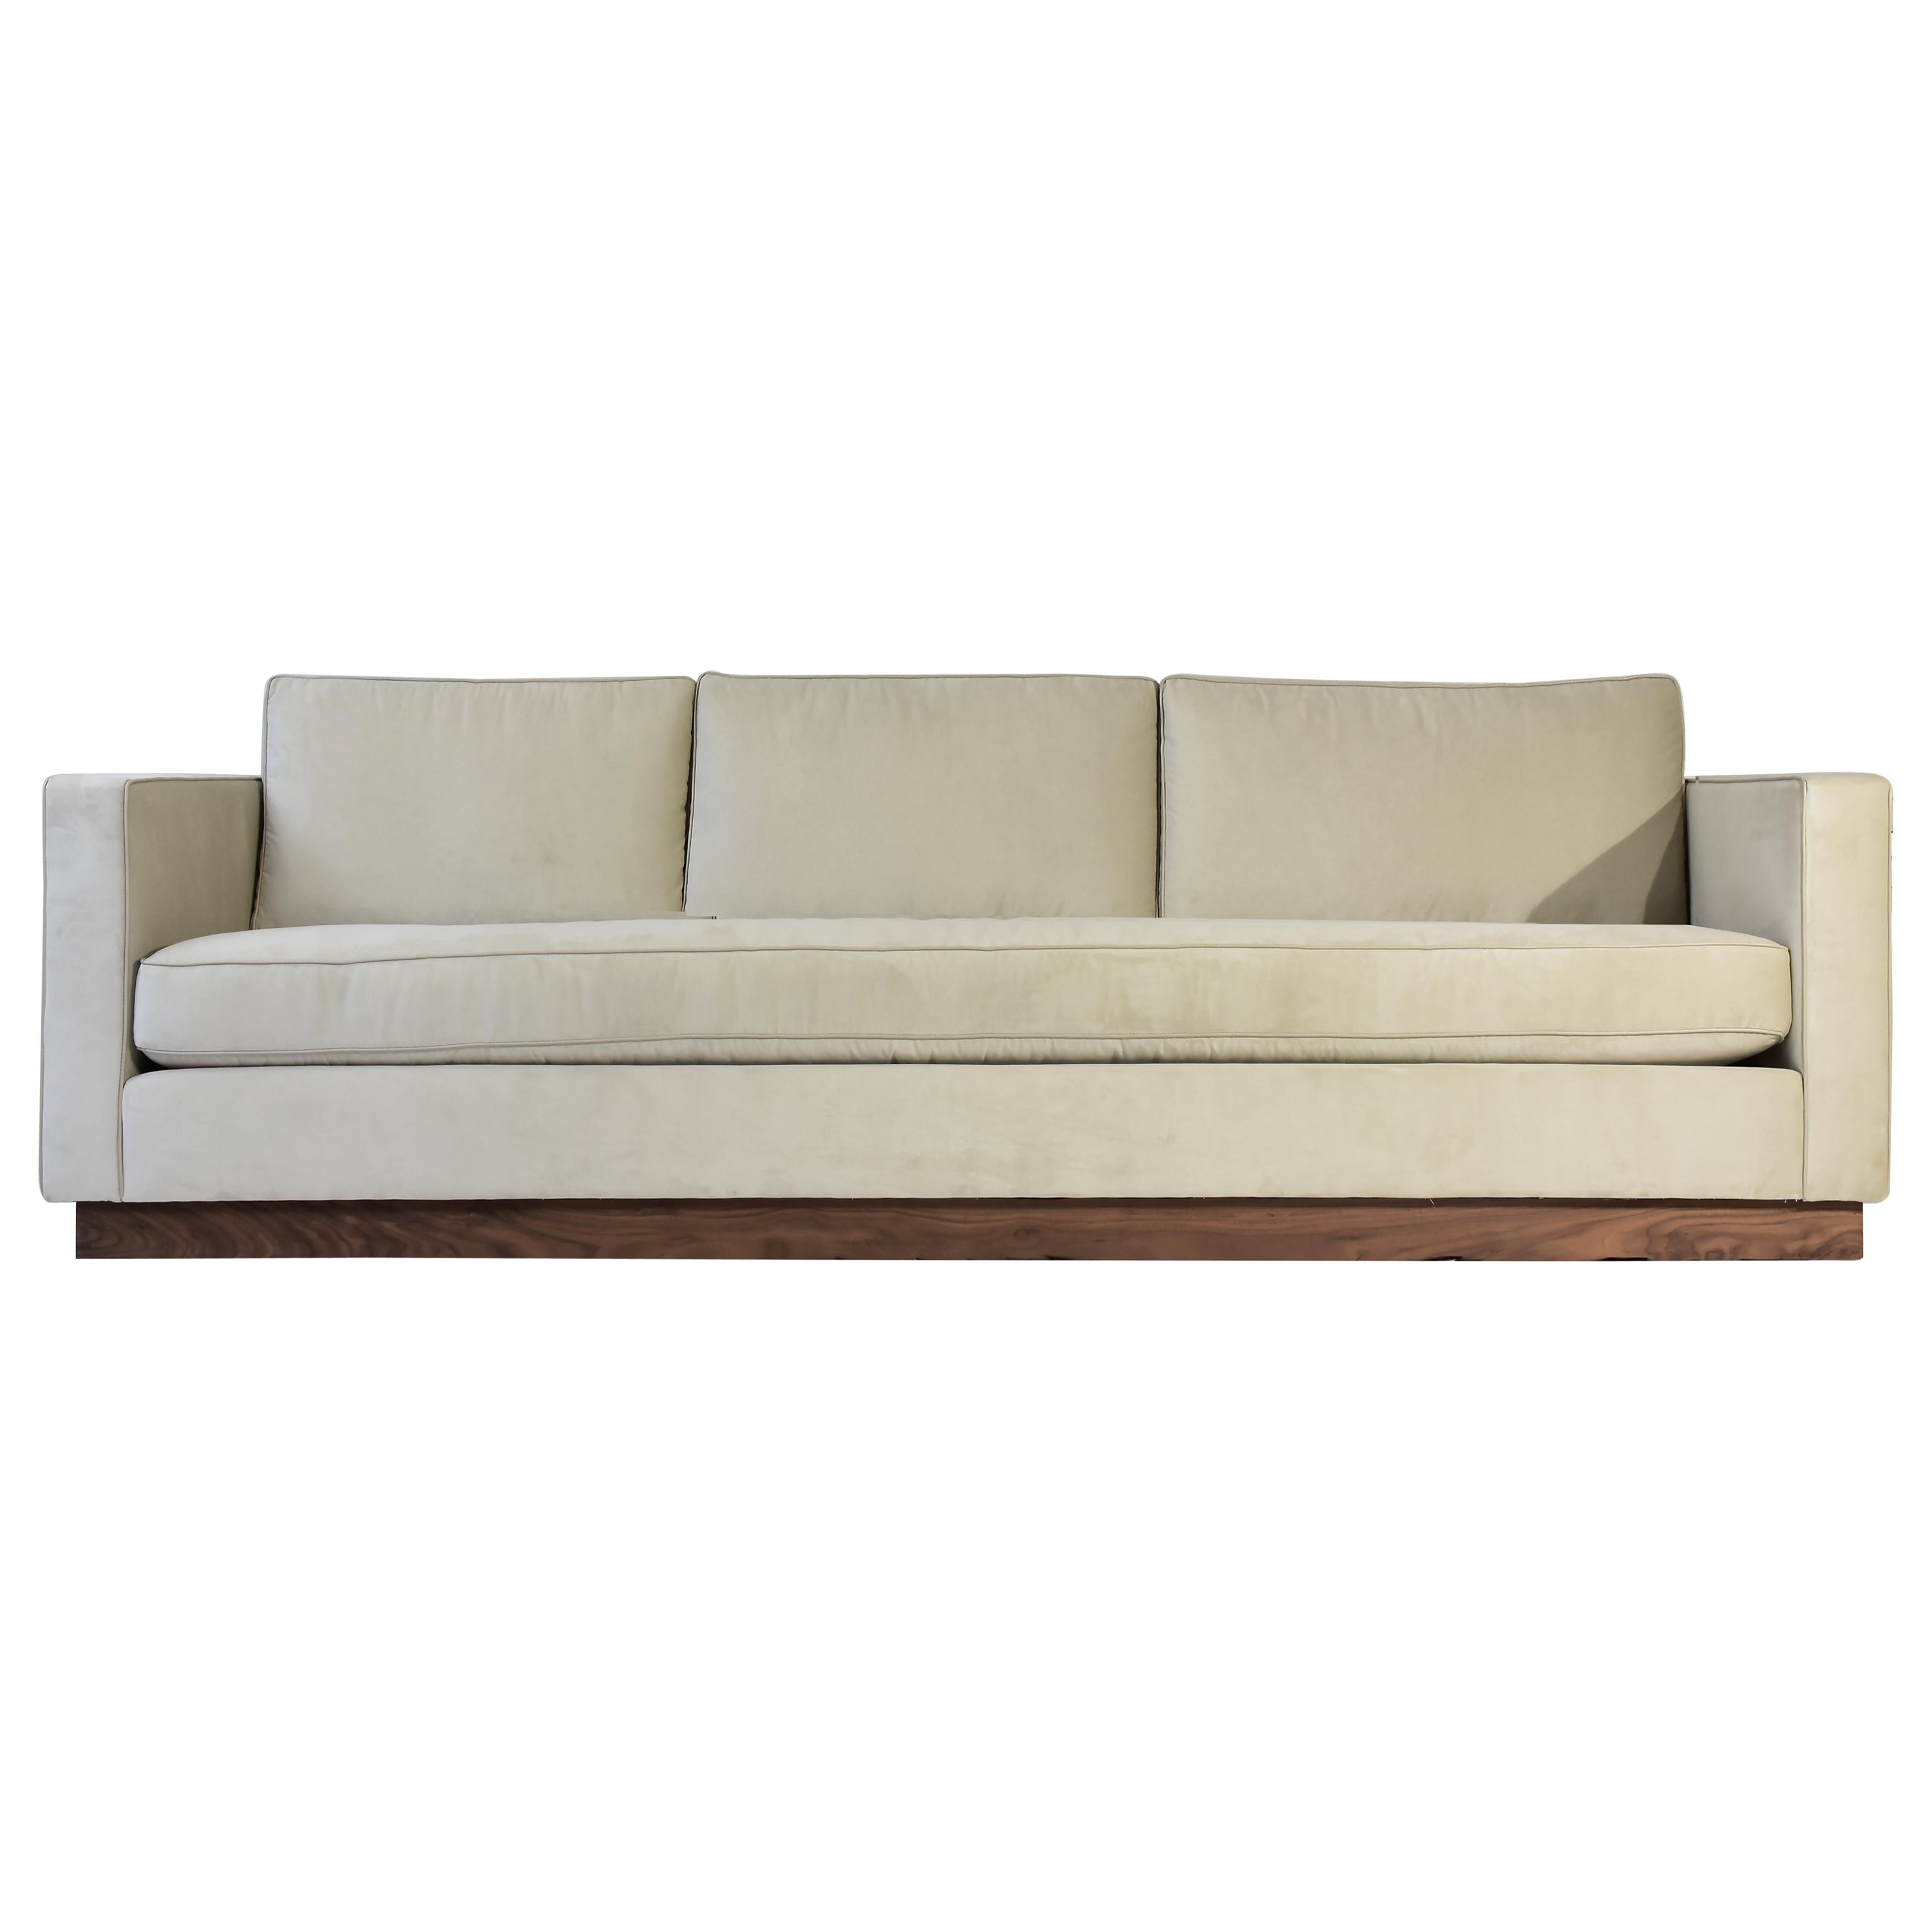 Le Jeune Upholstery Shaker 3-Seat Sofa Showroom Model For Sale